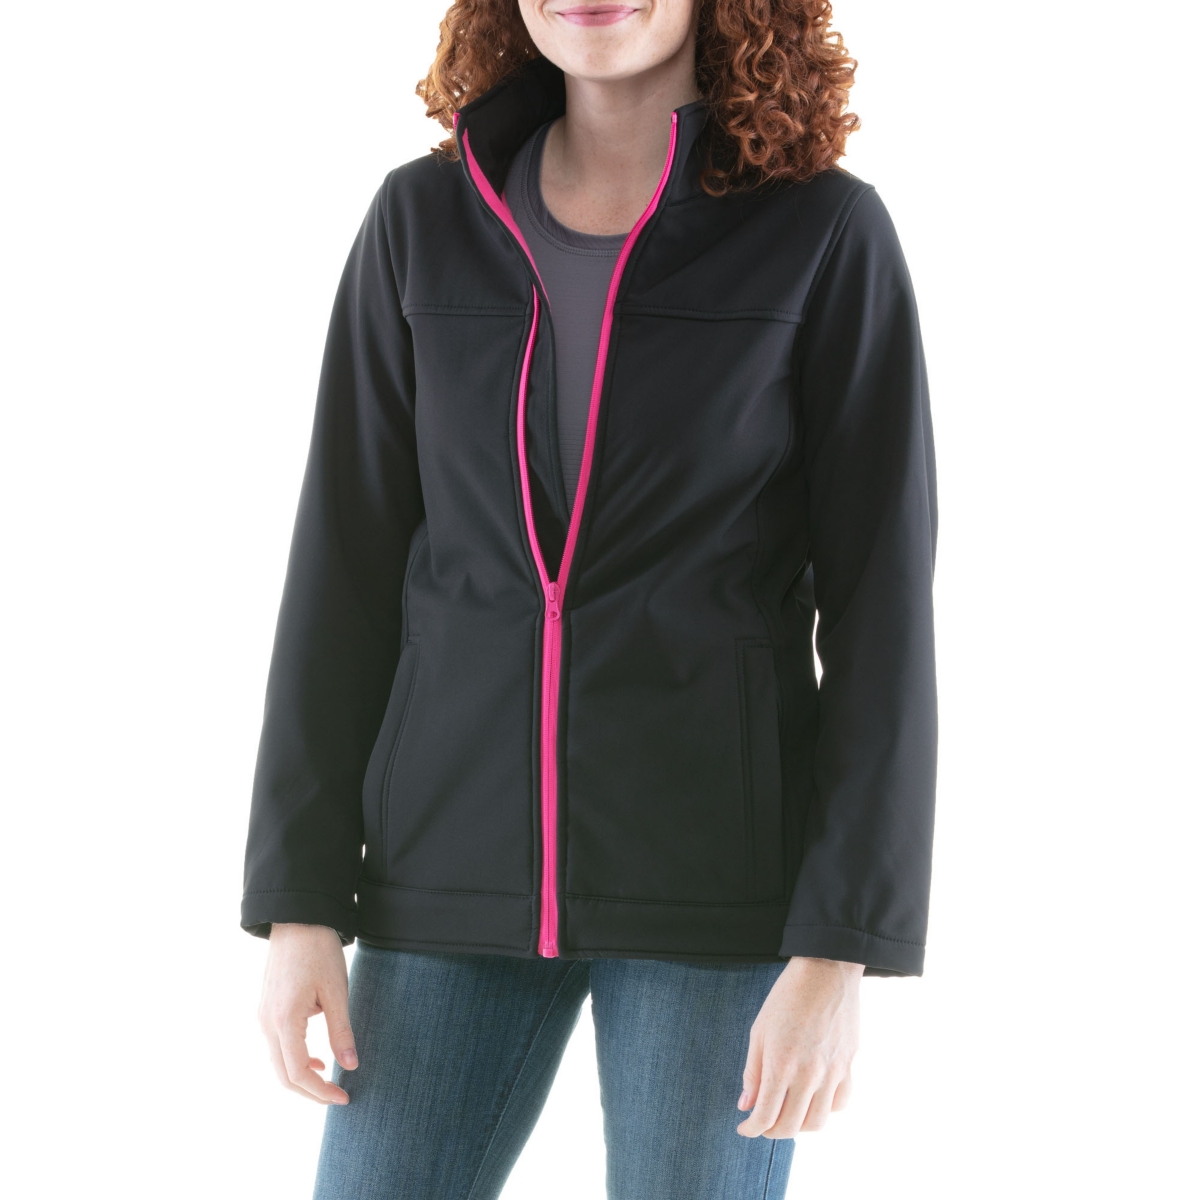 Women's Warm Softshell Jacket Full Zip with Micro Fleece Lining - Black